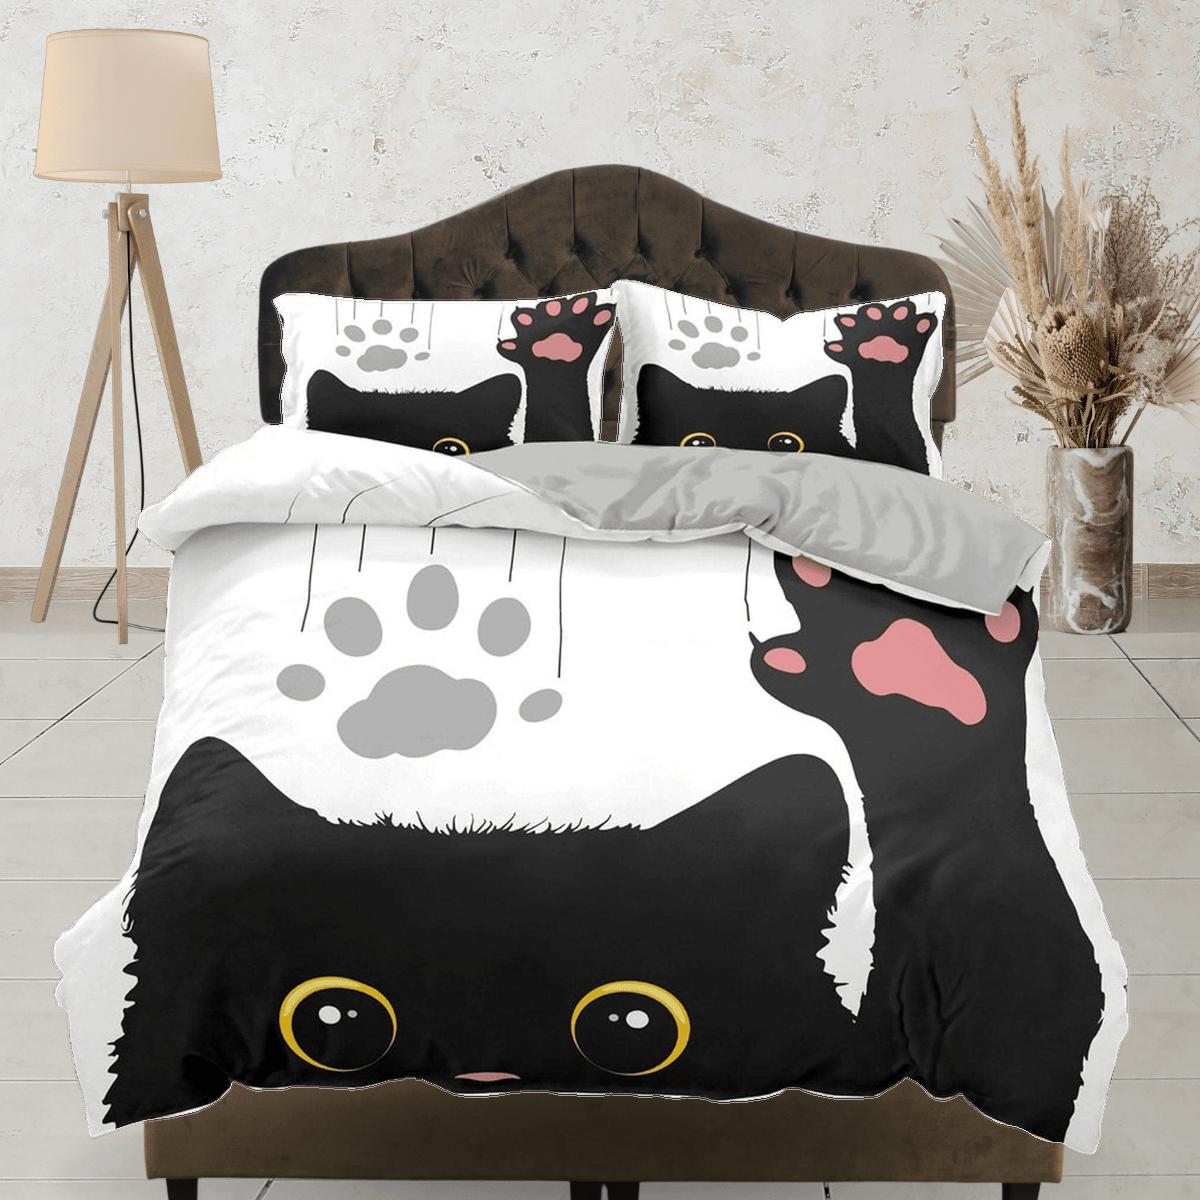 daintyduvet Cute black cat bedding, toddler bedding, kids duvet cover set, gift for cat lovers, baby bedding, baby shower gift, waving cat, paw print